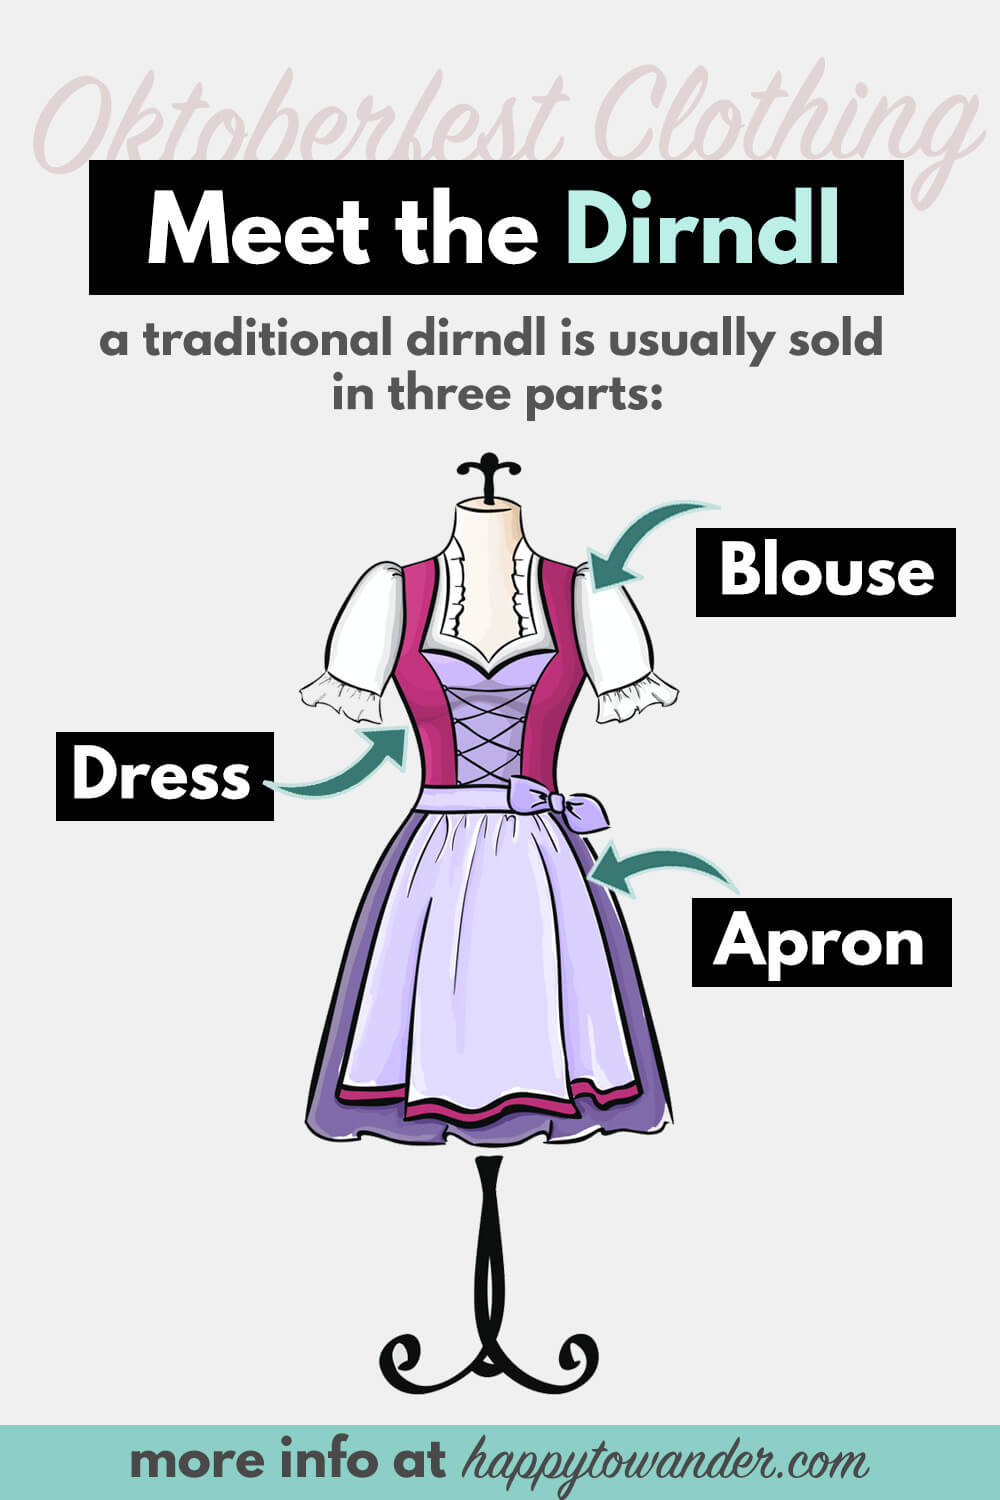 Helpful graphic explaining the traditional Oktoberfest dress kmown as a dirndl.